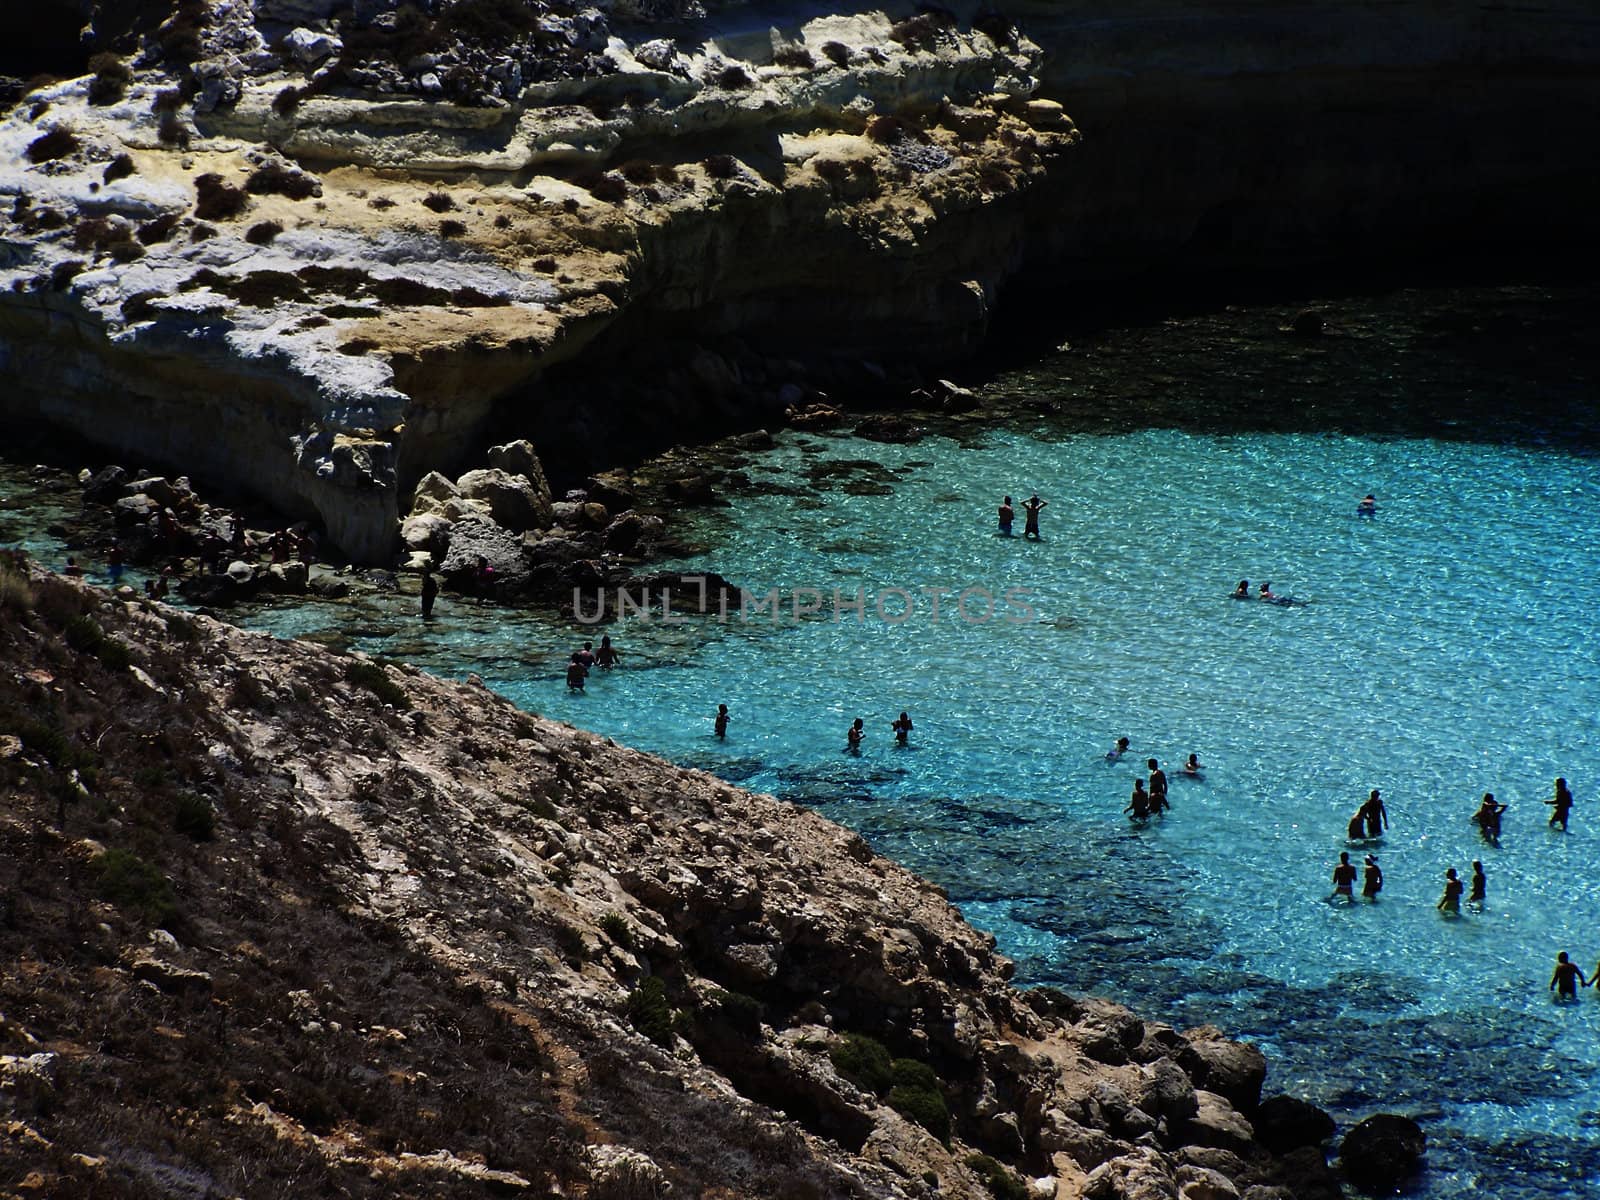 Island of rabbits- Lampedusa, Sicily by gandolfocannatella